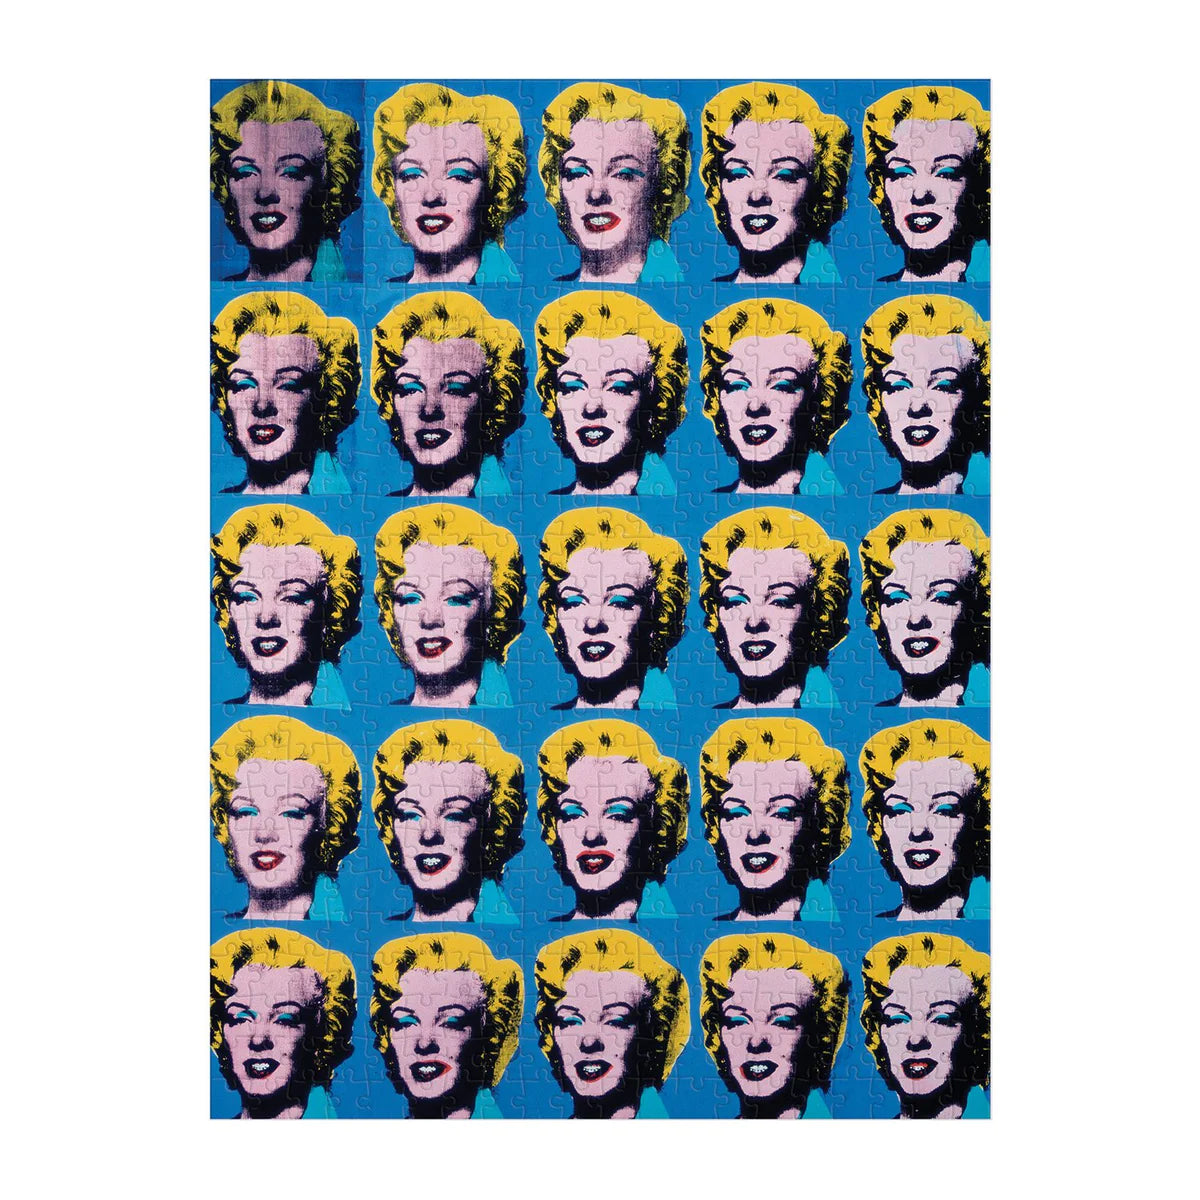 Andy Warhol - Marilyn Monroe 500 Piece Puzzle